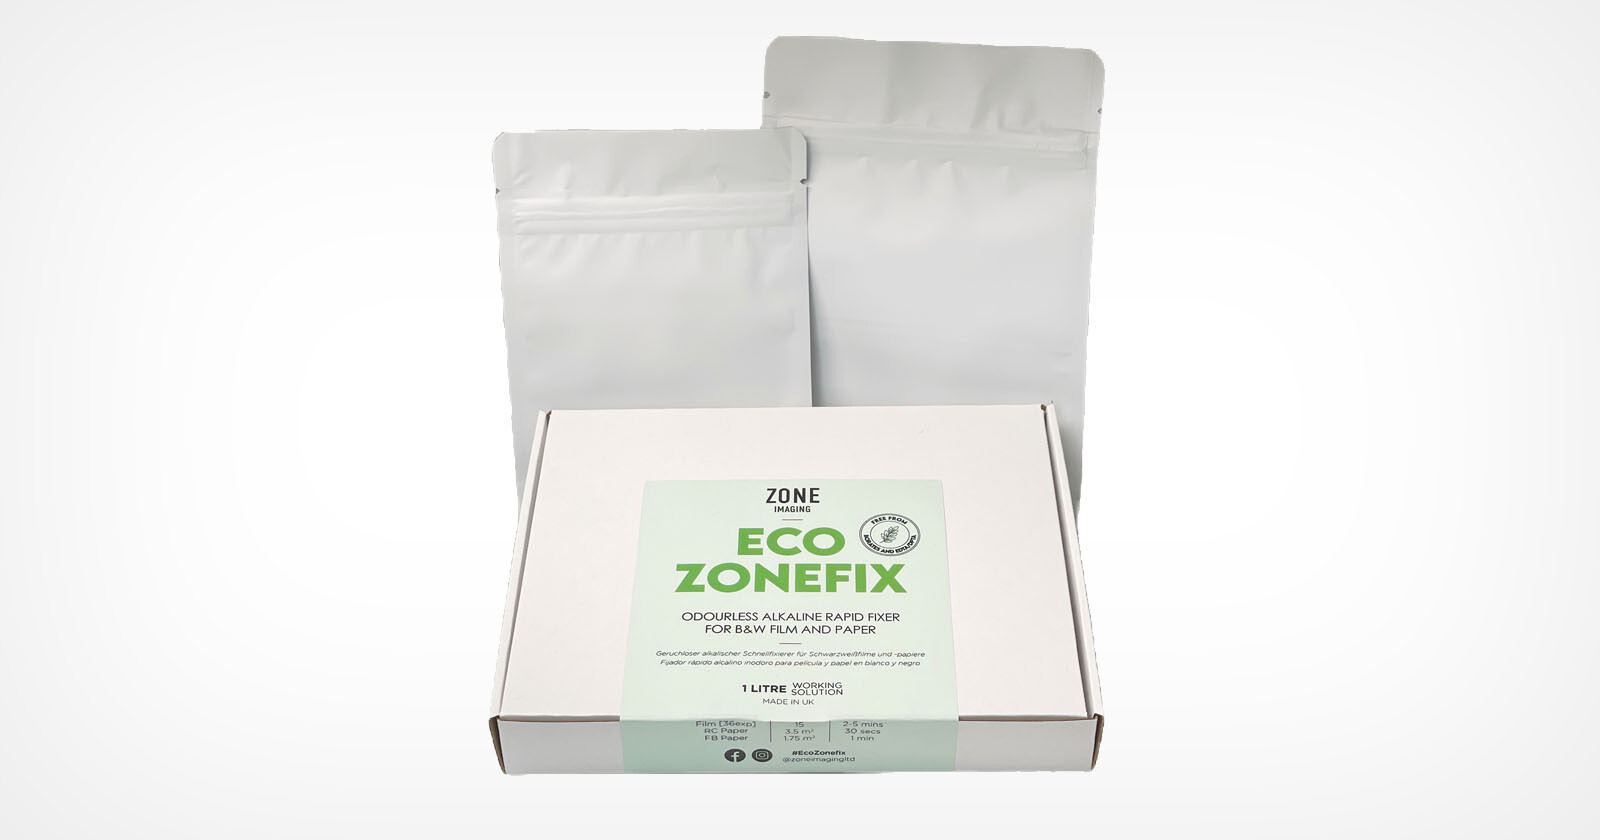  eco zonefix powered earth-friendly rapid fixer 